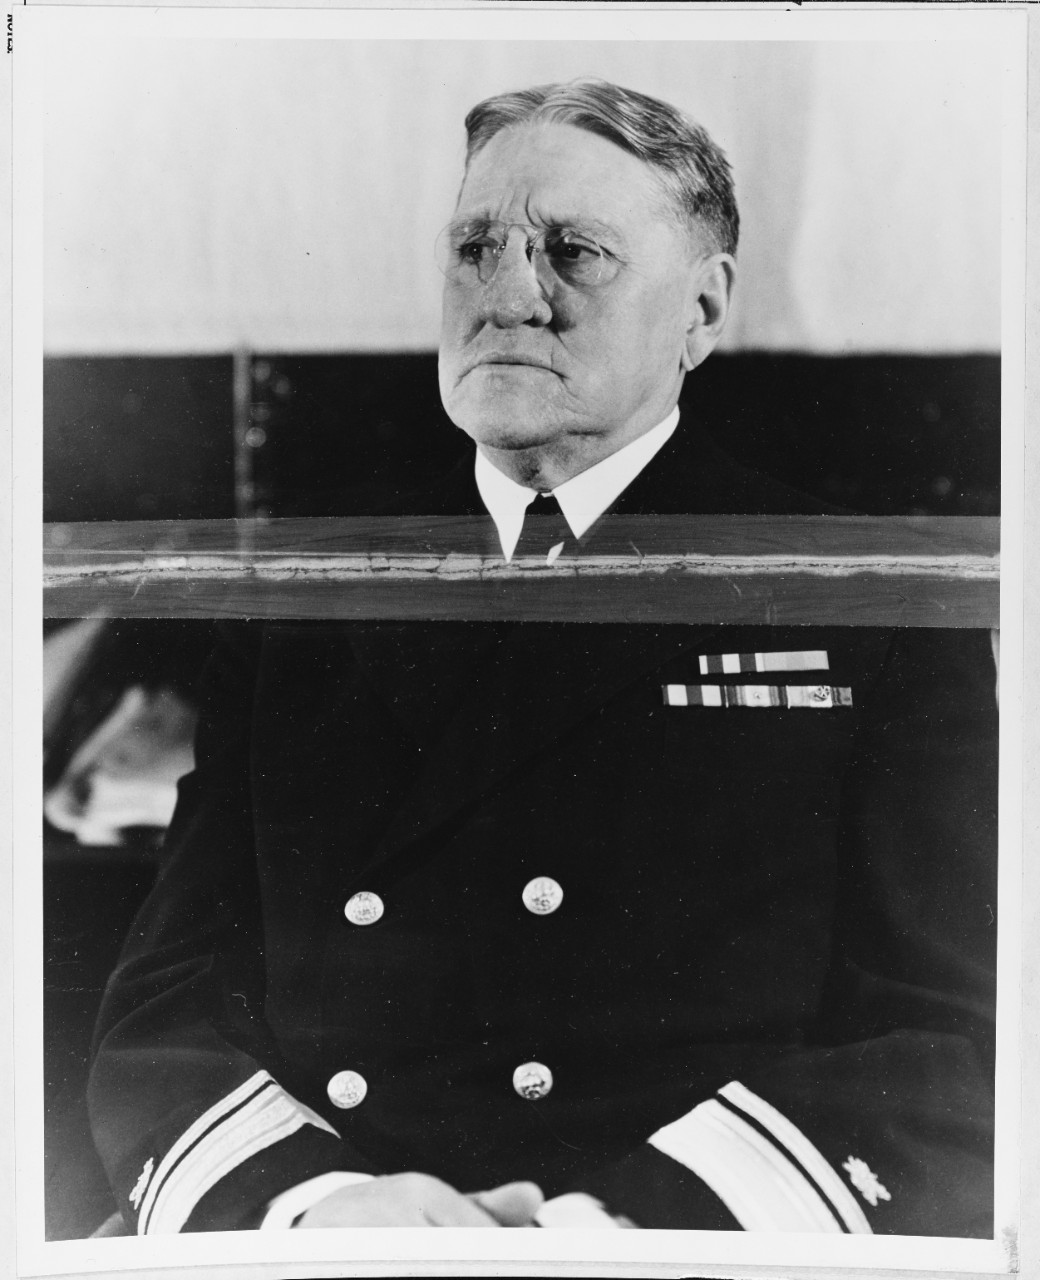 Rear Admiral Trevor Leutze, U.S. Naval Academy class of 1897.